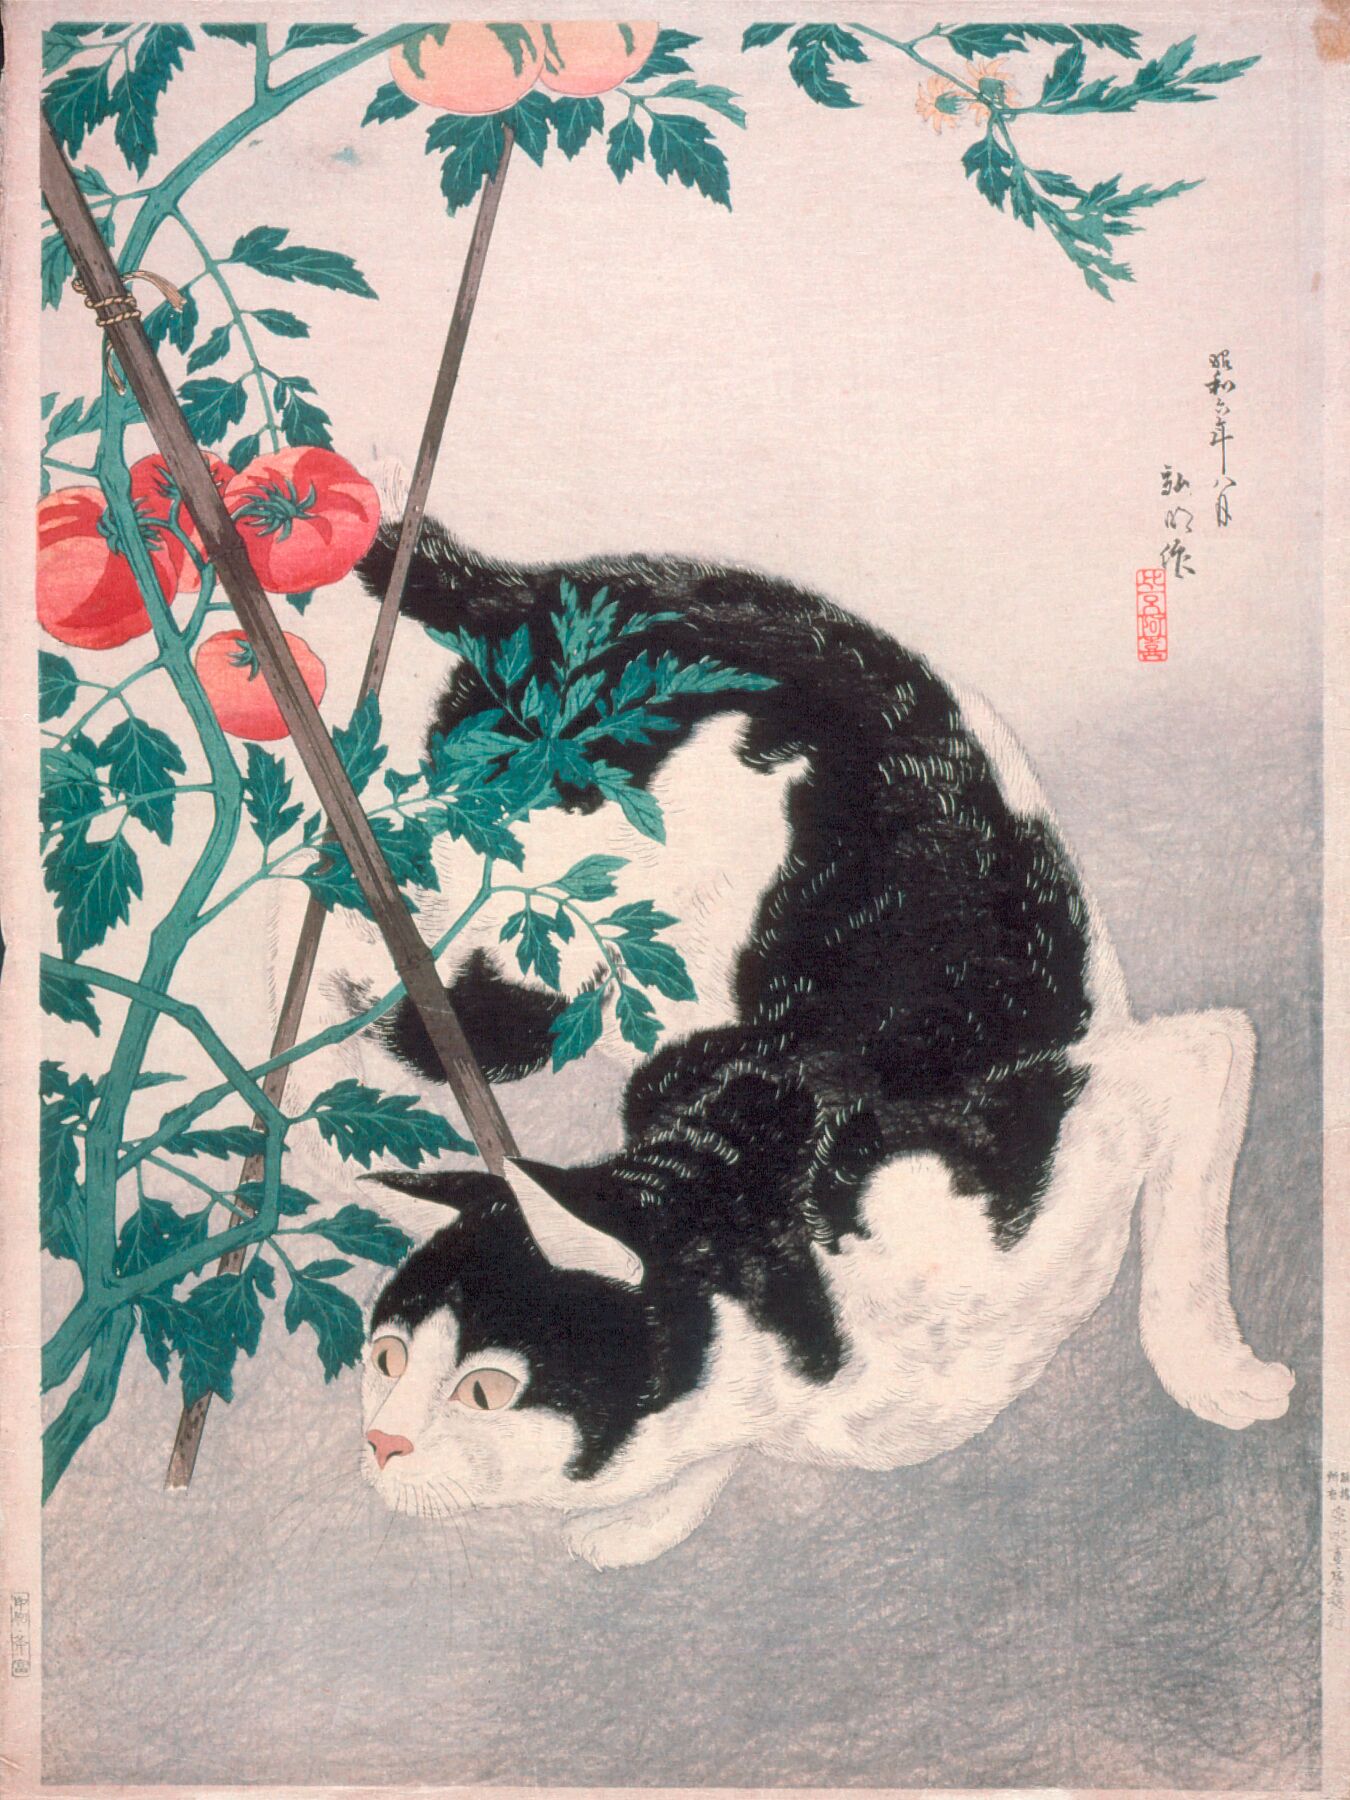 Cat with Tomato Plant Alternate (Title: Tomato to neko Takahashi Hiroaki (Japan, 1871-1945) - Japan, August, 1931